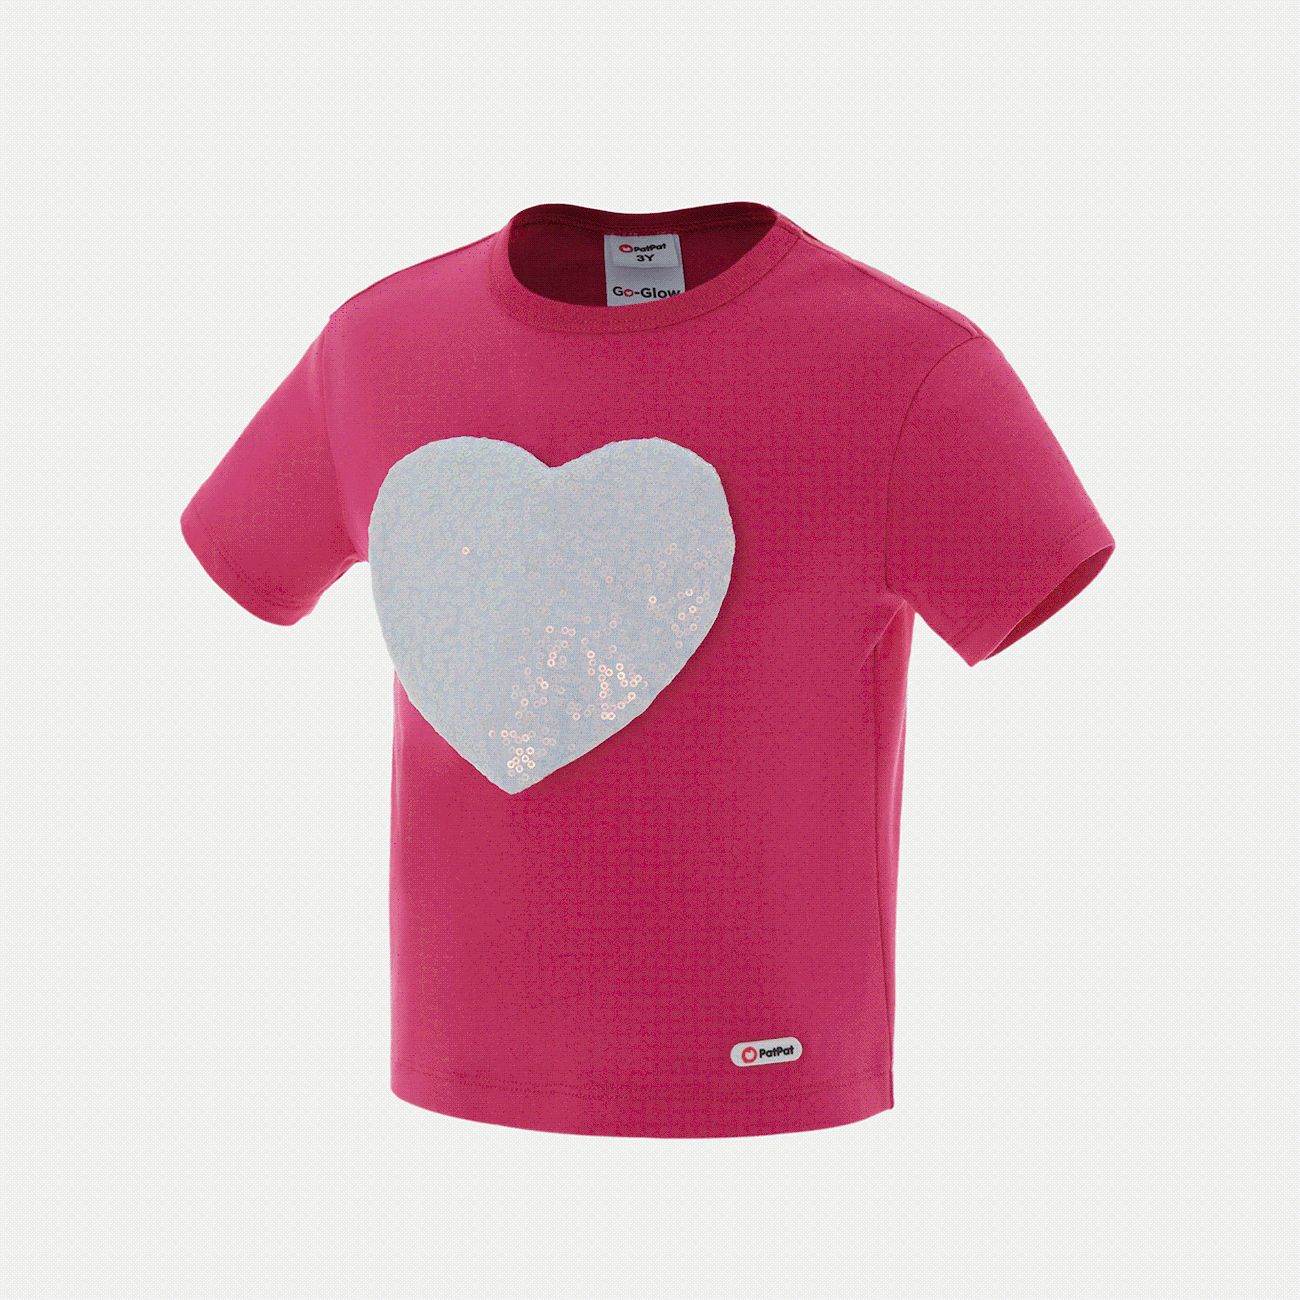 Niño pequeño Chica Hipertáctil Dulce Manga corta Camiseta Rosa caliente big image 1